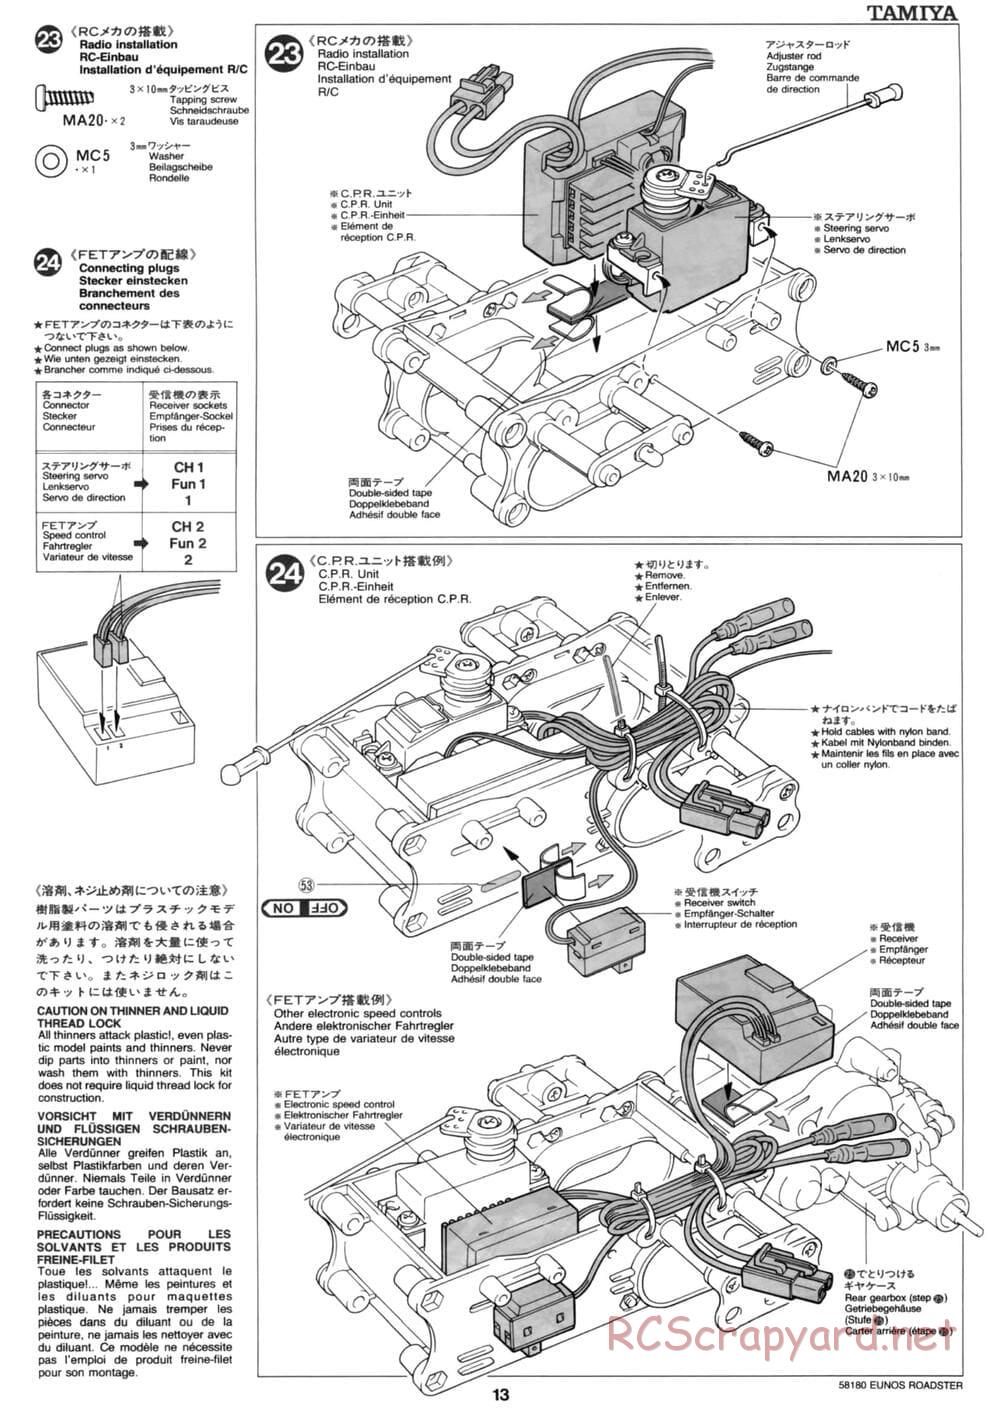 Tamiya - Eunos Roadster - M02M Chassis - Manual - Page 13